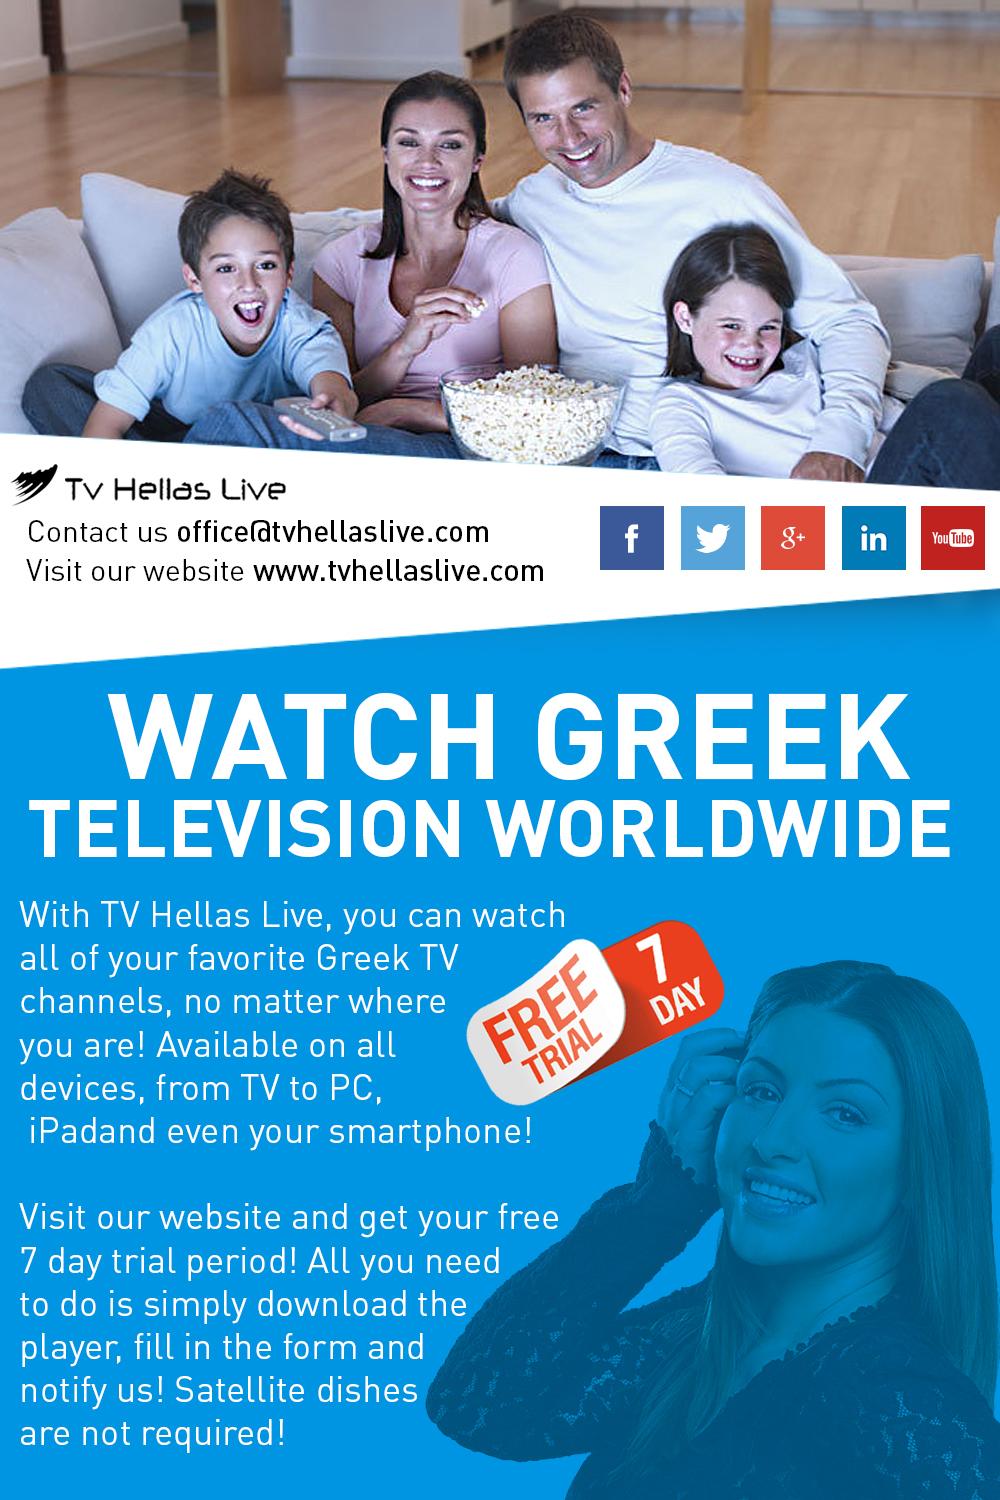 TV Hellas Live (@tvhellaslive) / Twitter